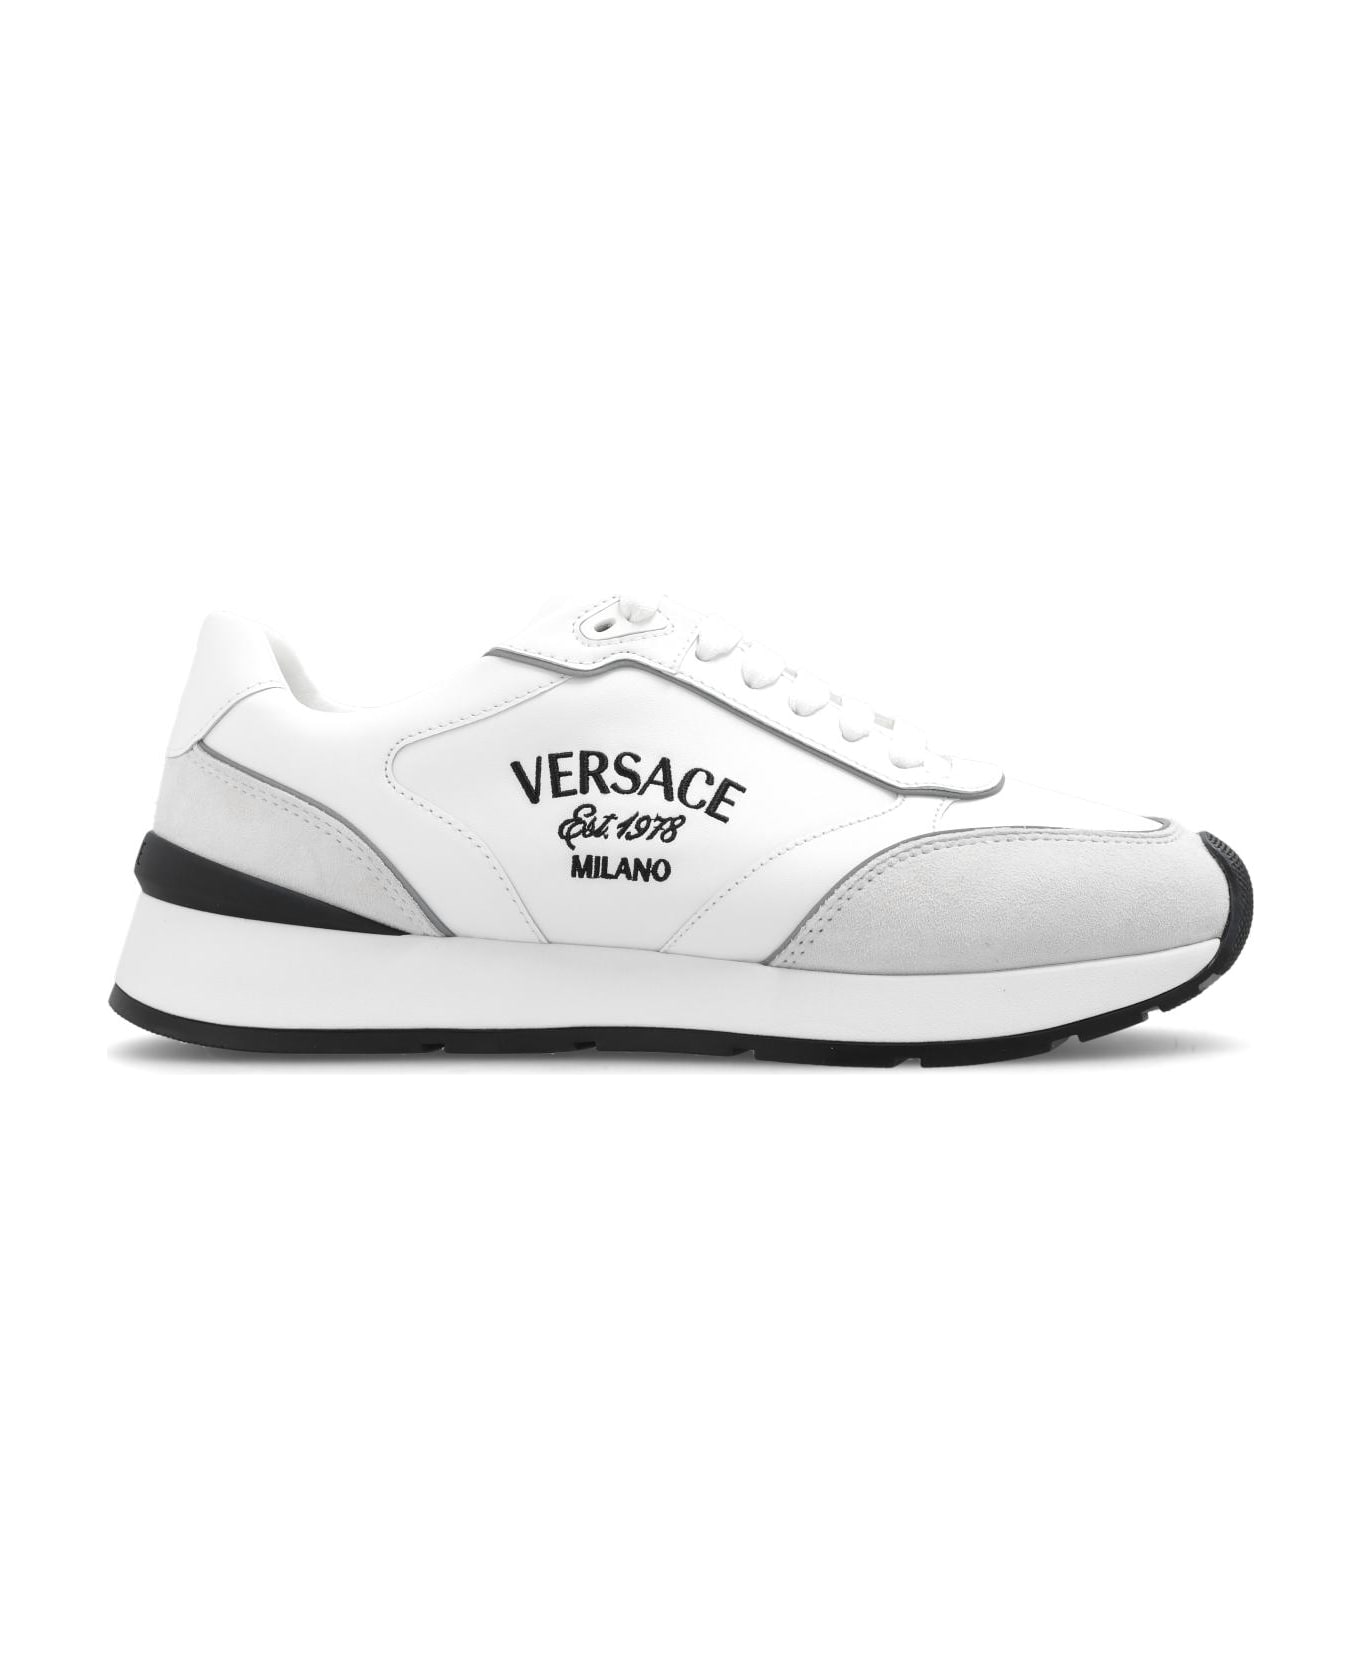 Versace 'milano' Sneakers - Bianco スニーカー